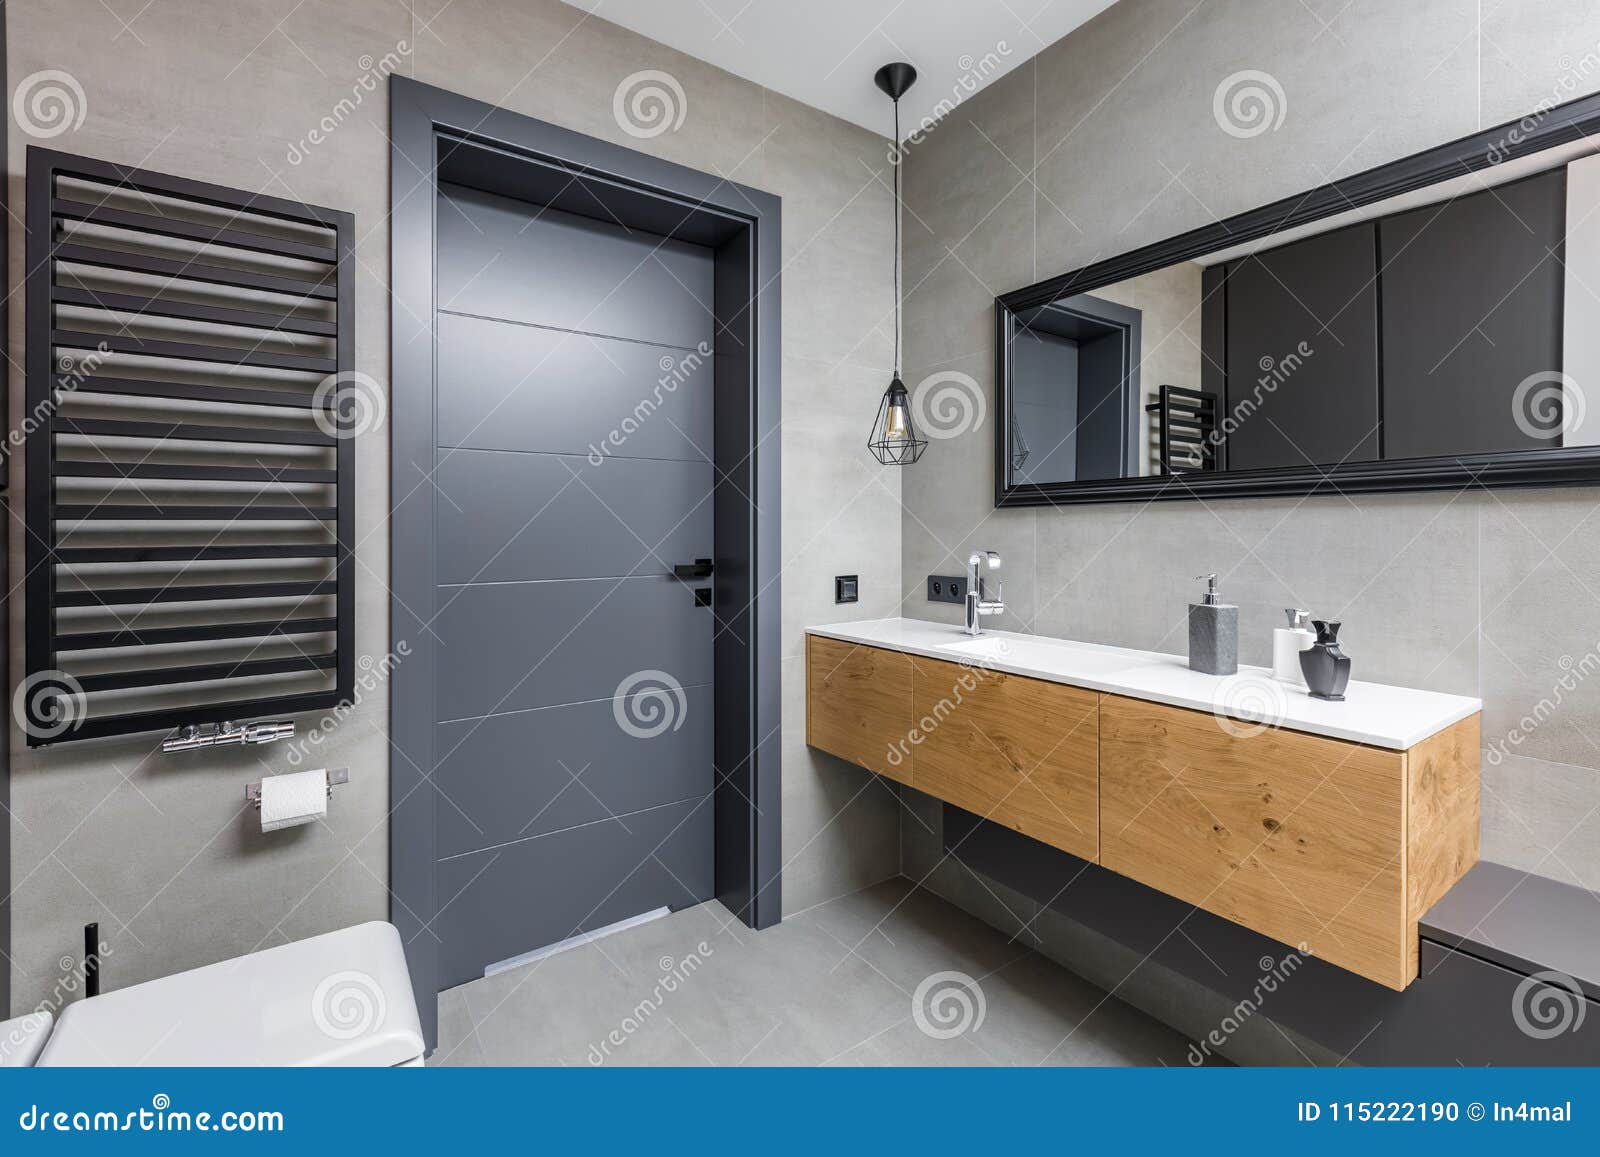 Dark Bathroom With Countertop Basin Stock Photo Image Of Design